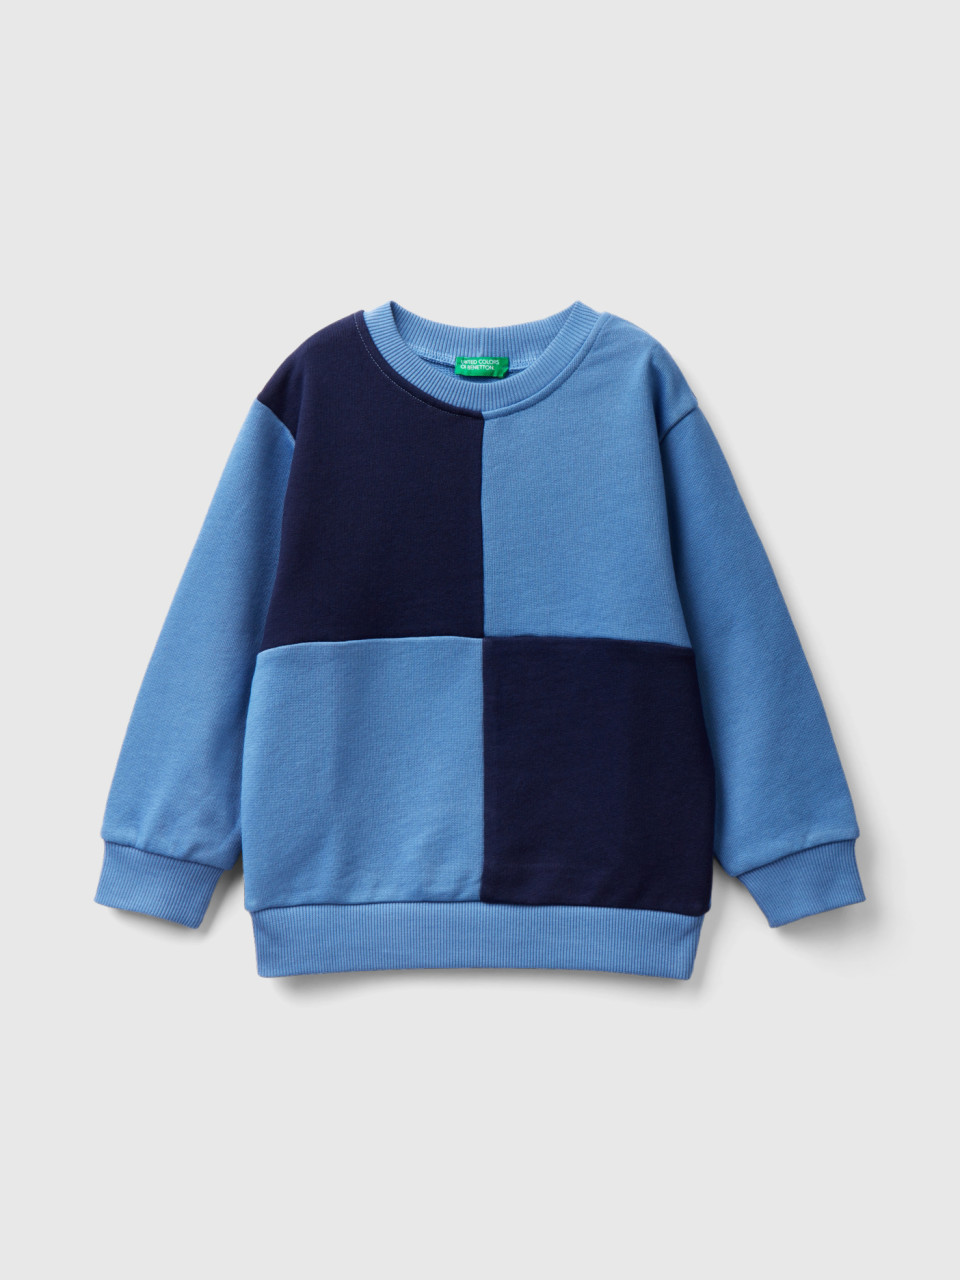 Benetton, Sweatshirt With Maxi Check, Light Blue, Kids